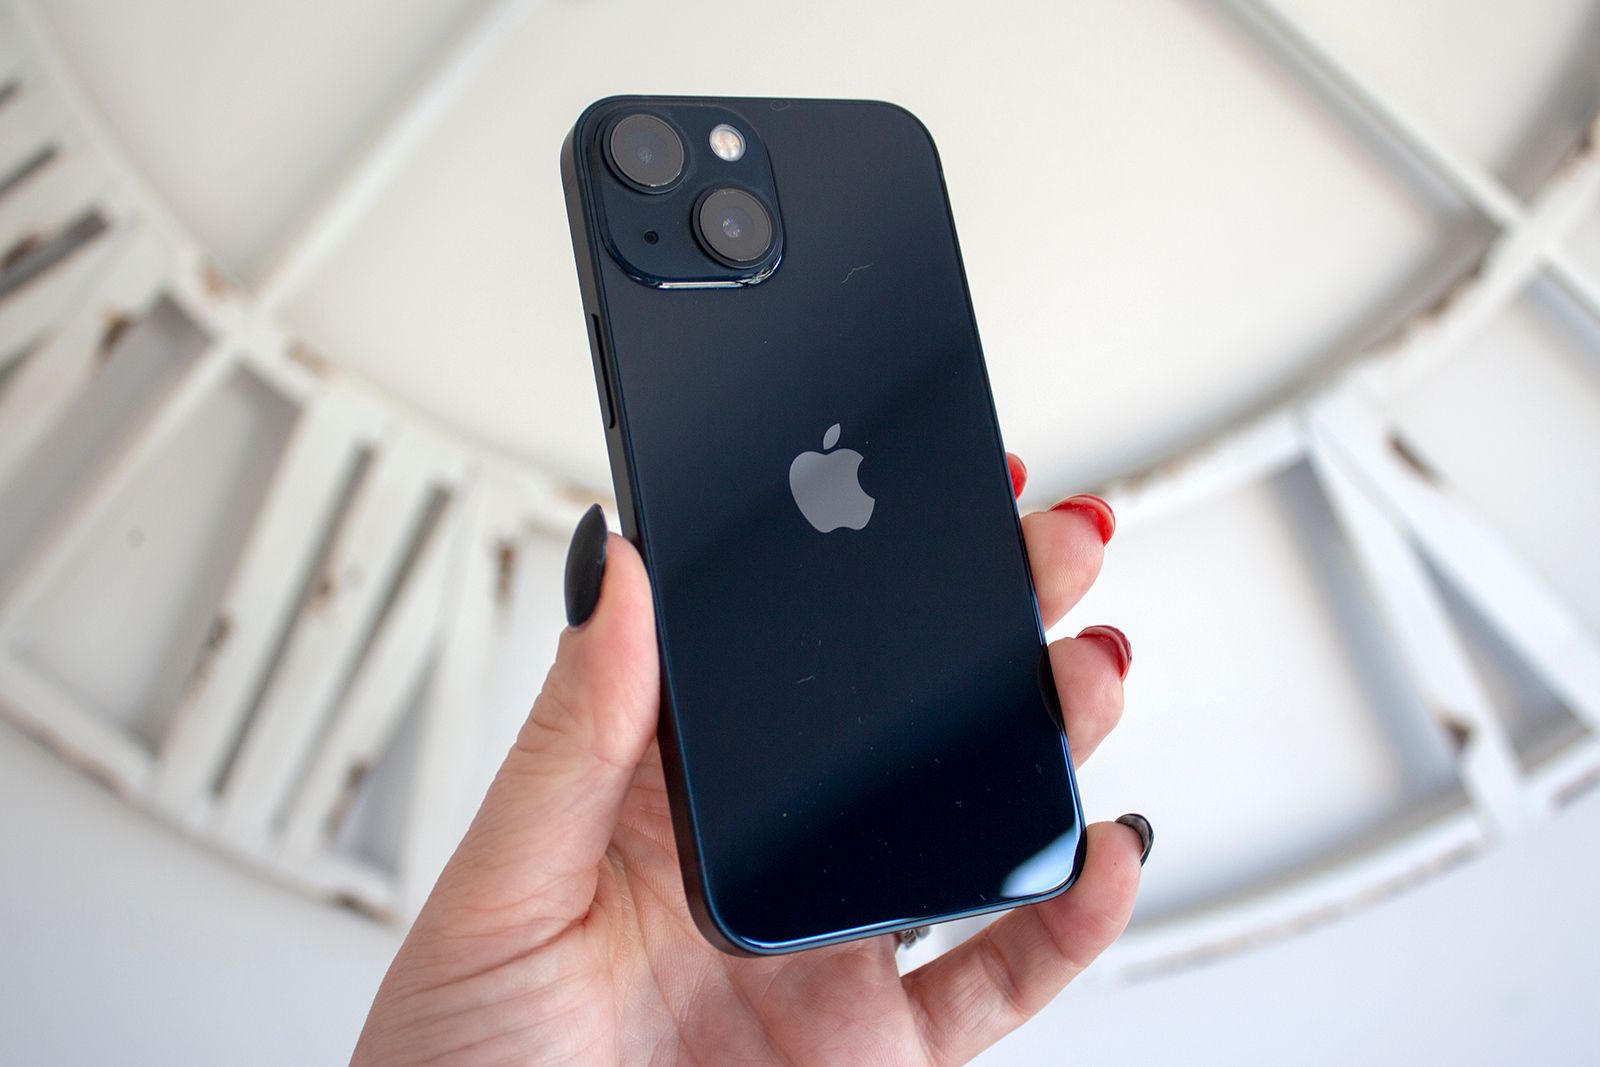 Apple iPhone 12 Mini review: petite yet powerful